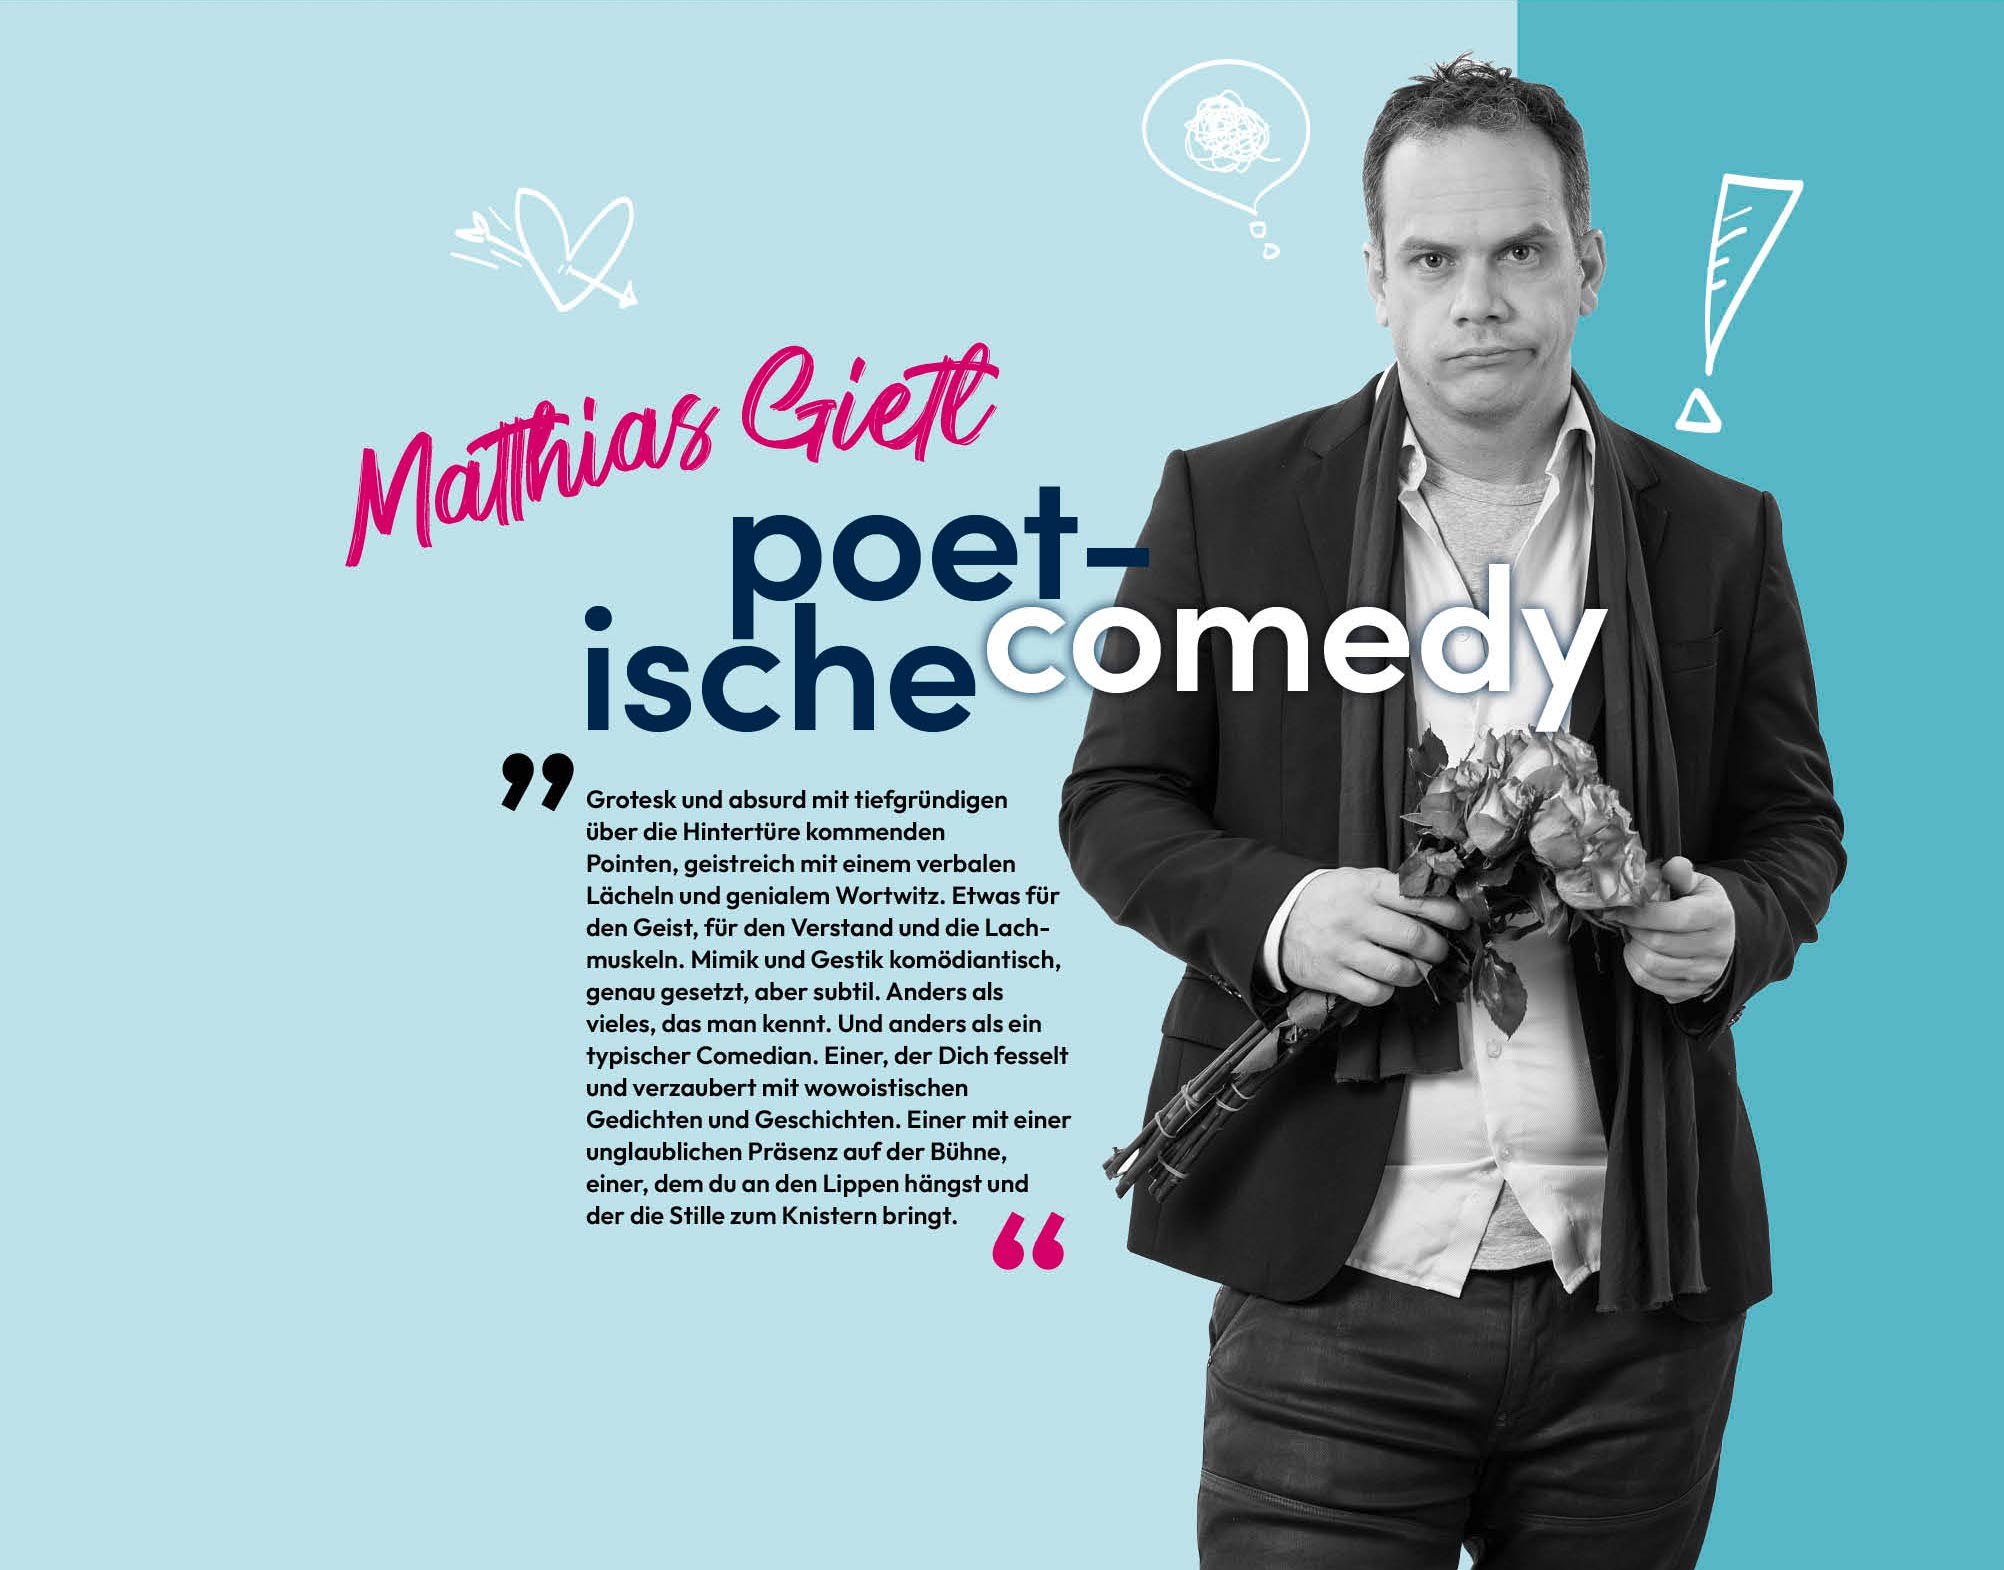 Matthias Gietl poetische comedy